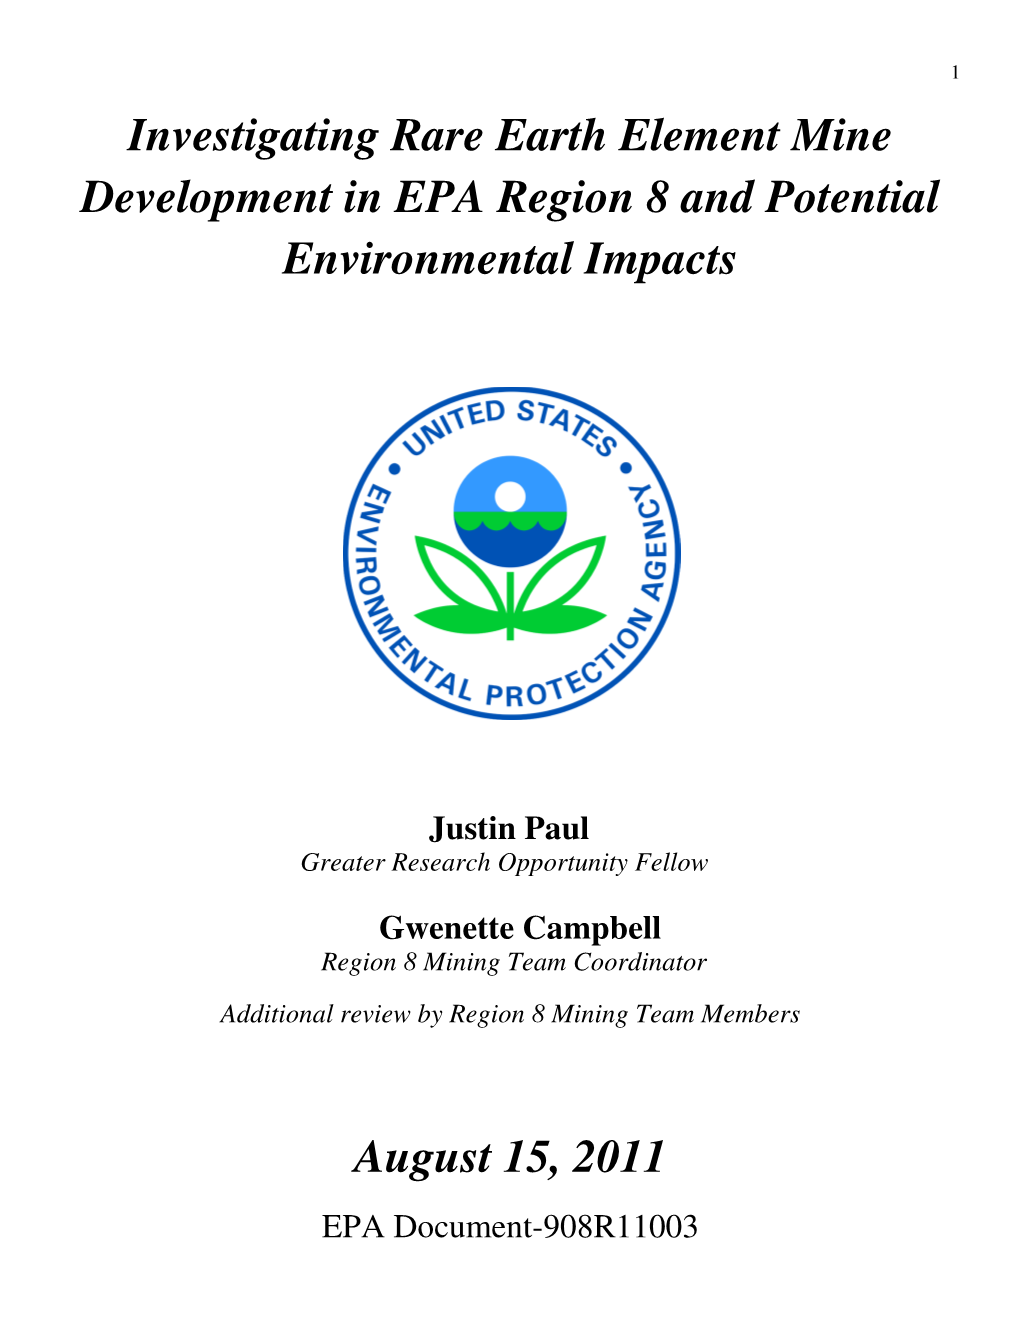 Investigating Rare Earth Element Mine Development in EPA Region 8 and Potential Environmental Impacts